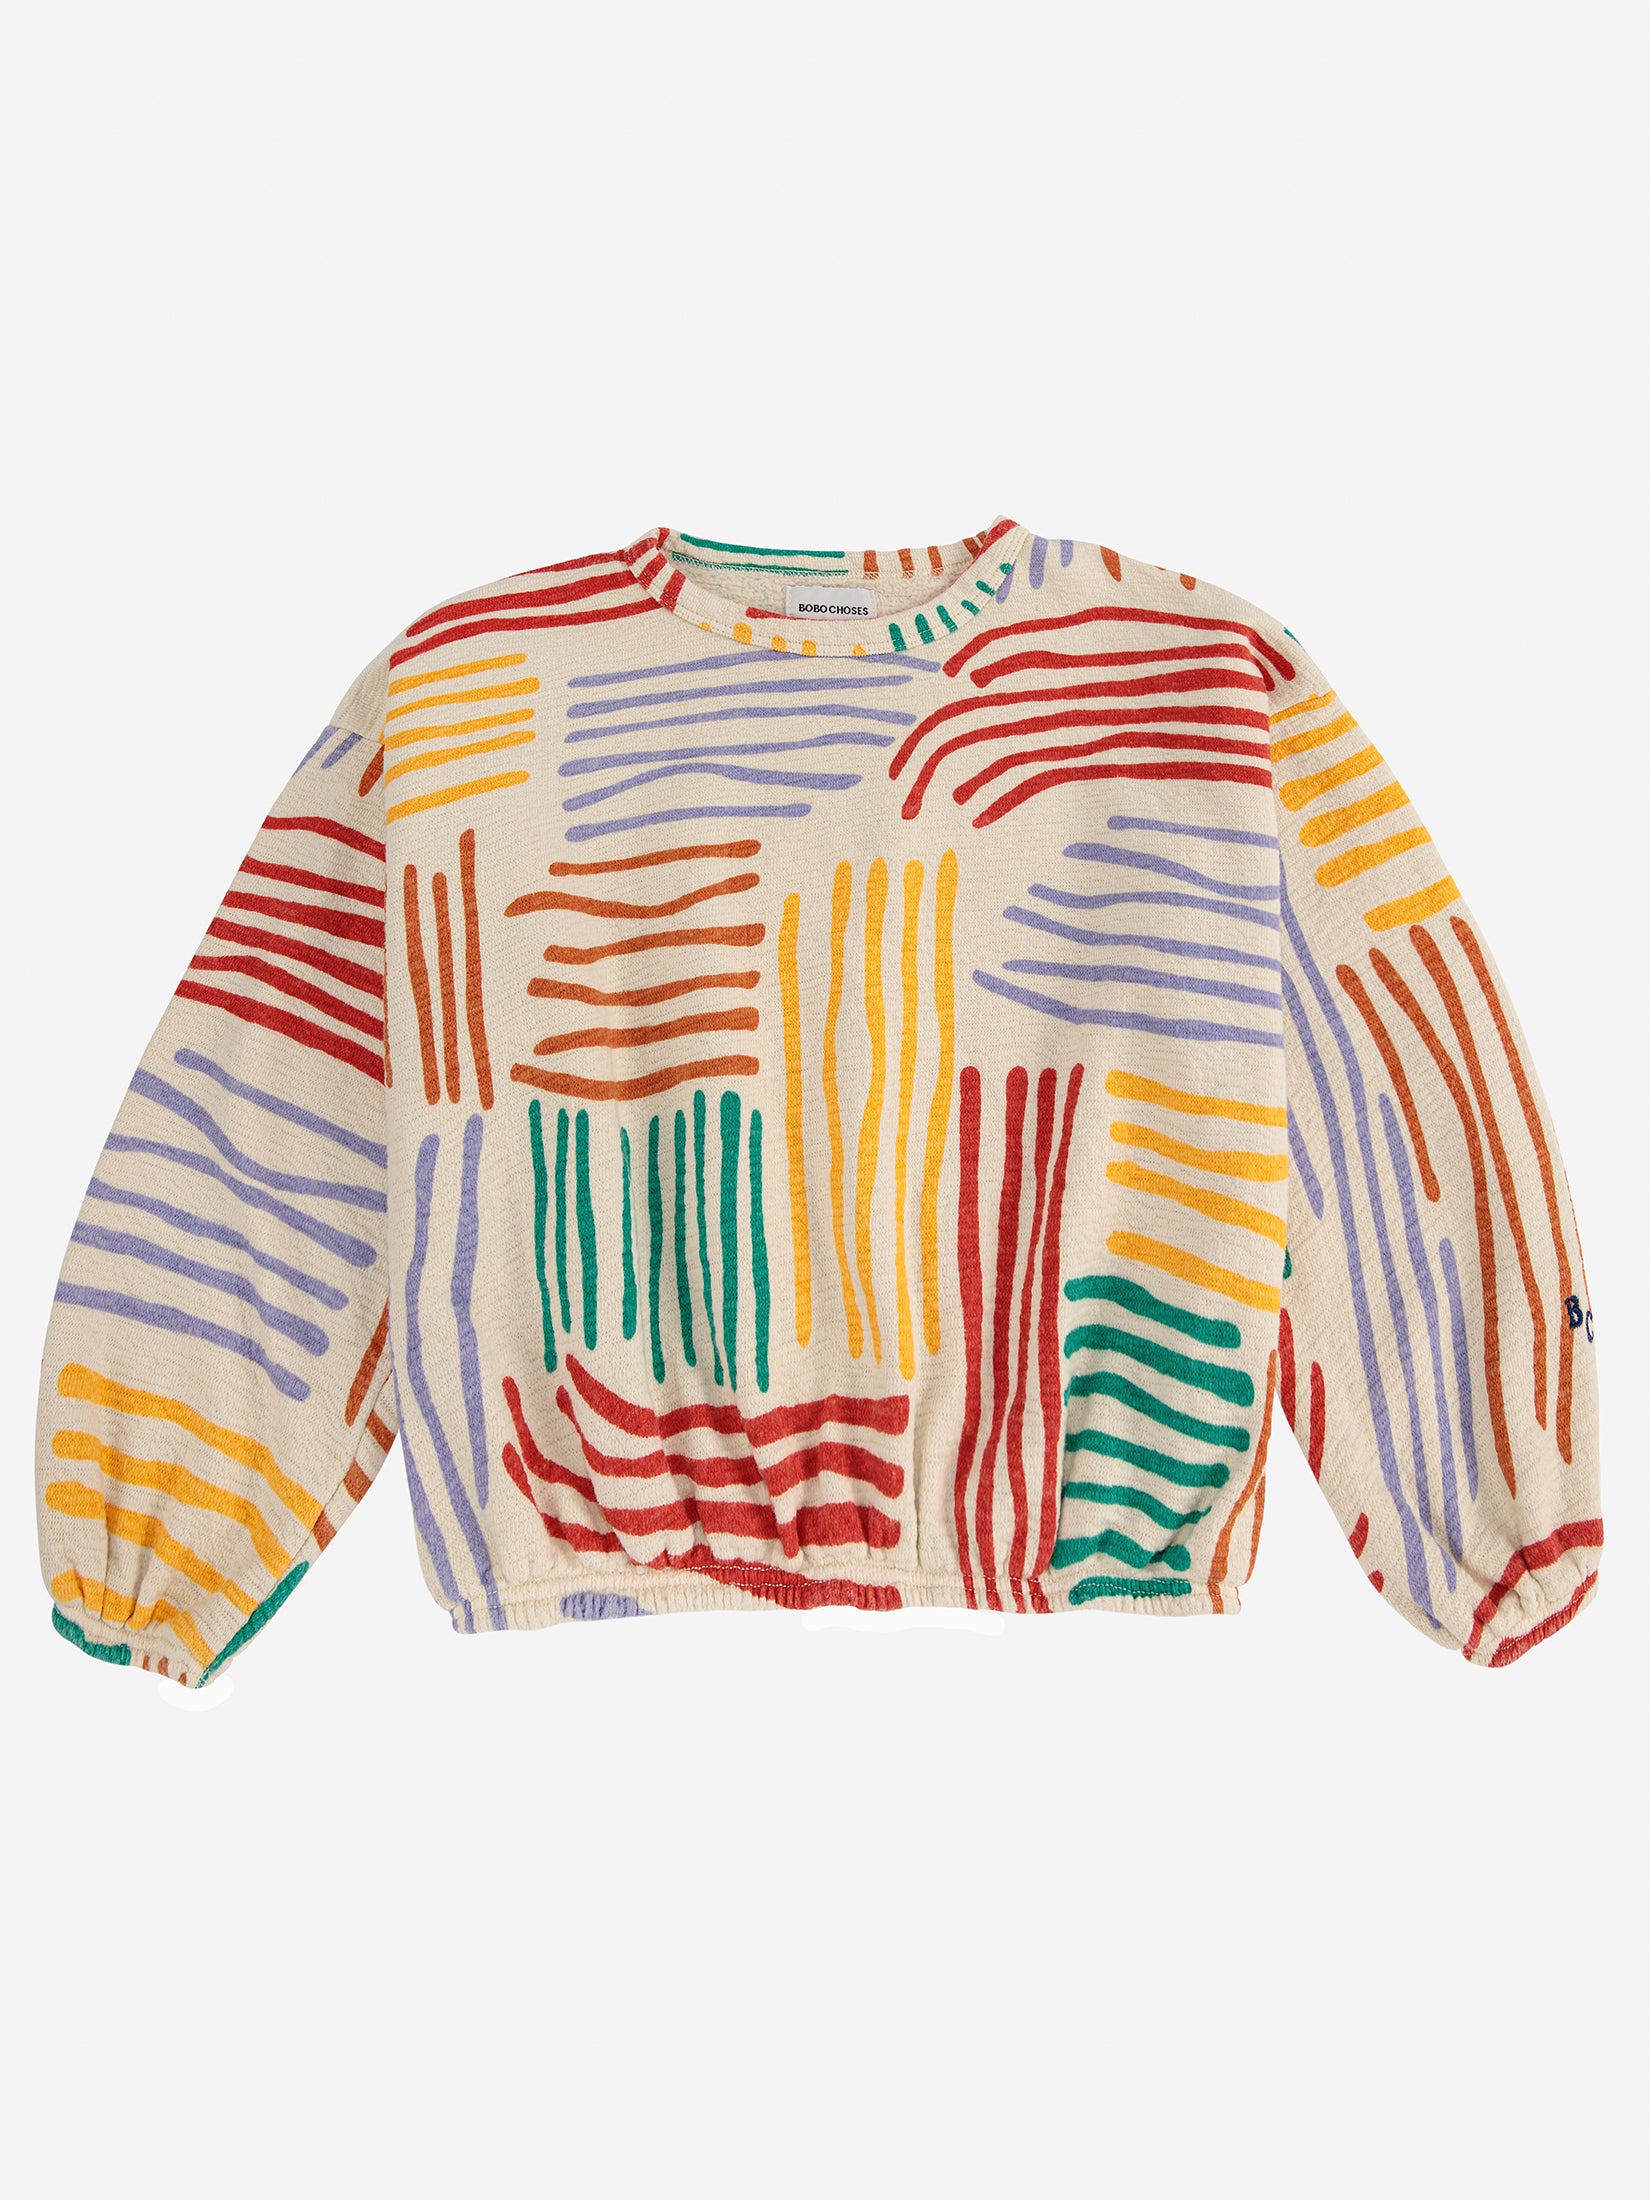 Bobo Choses Kids Sweatshirt - Crazy Lines all Over